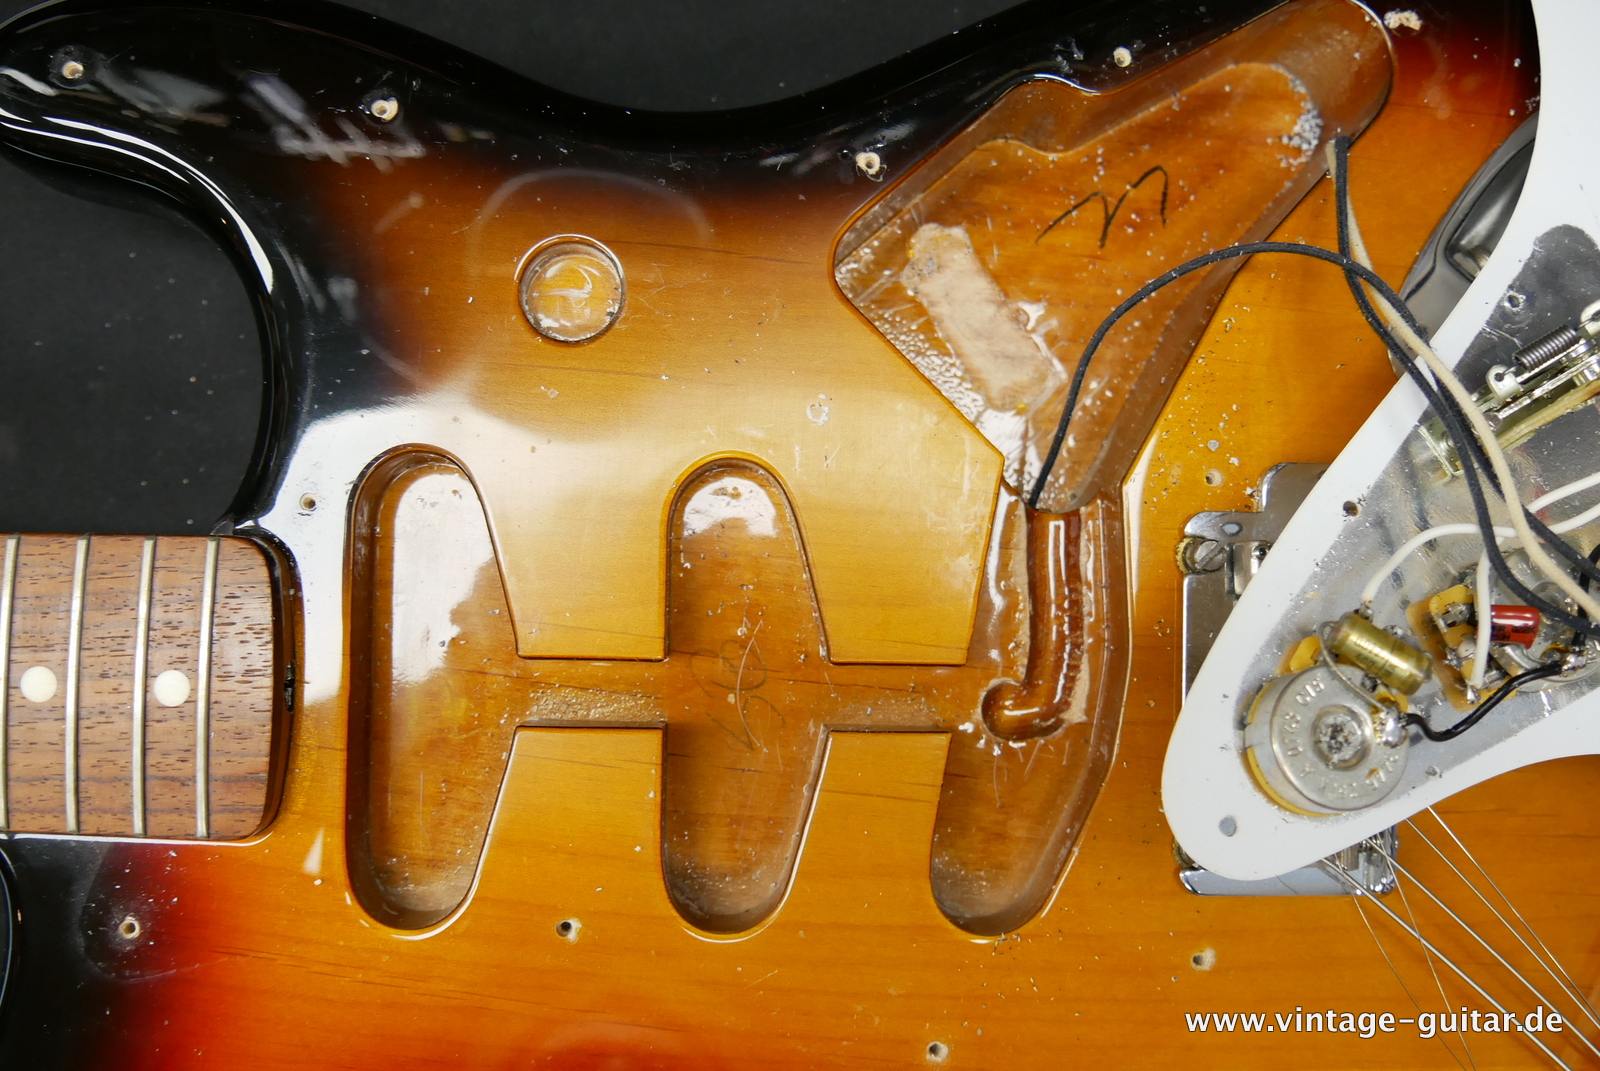 Fender_Stratocaster_crafted_in_Japan_sunburst_two_piont_tromolo_3,76kg-013.JPG